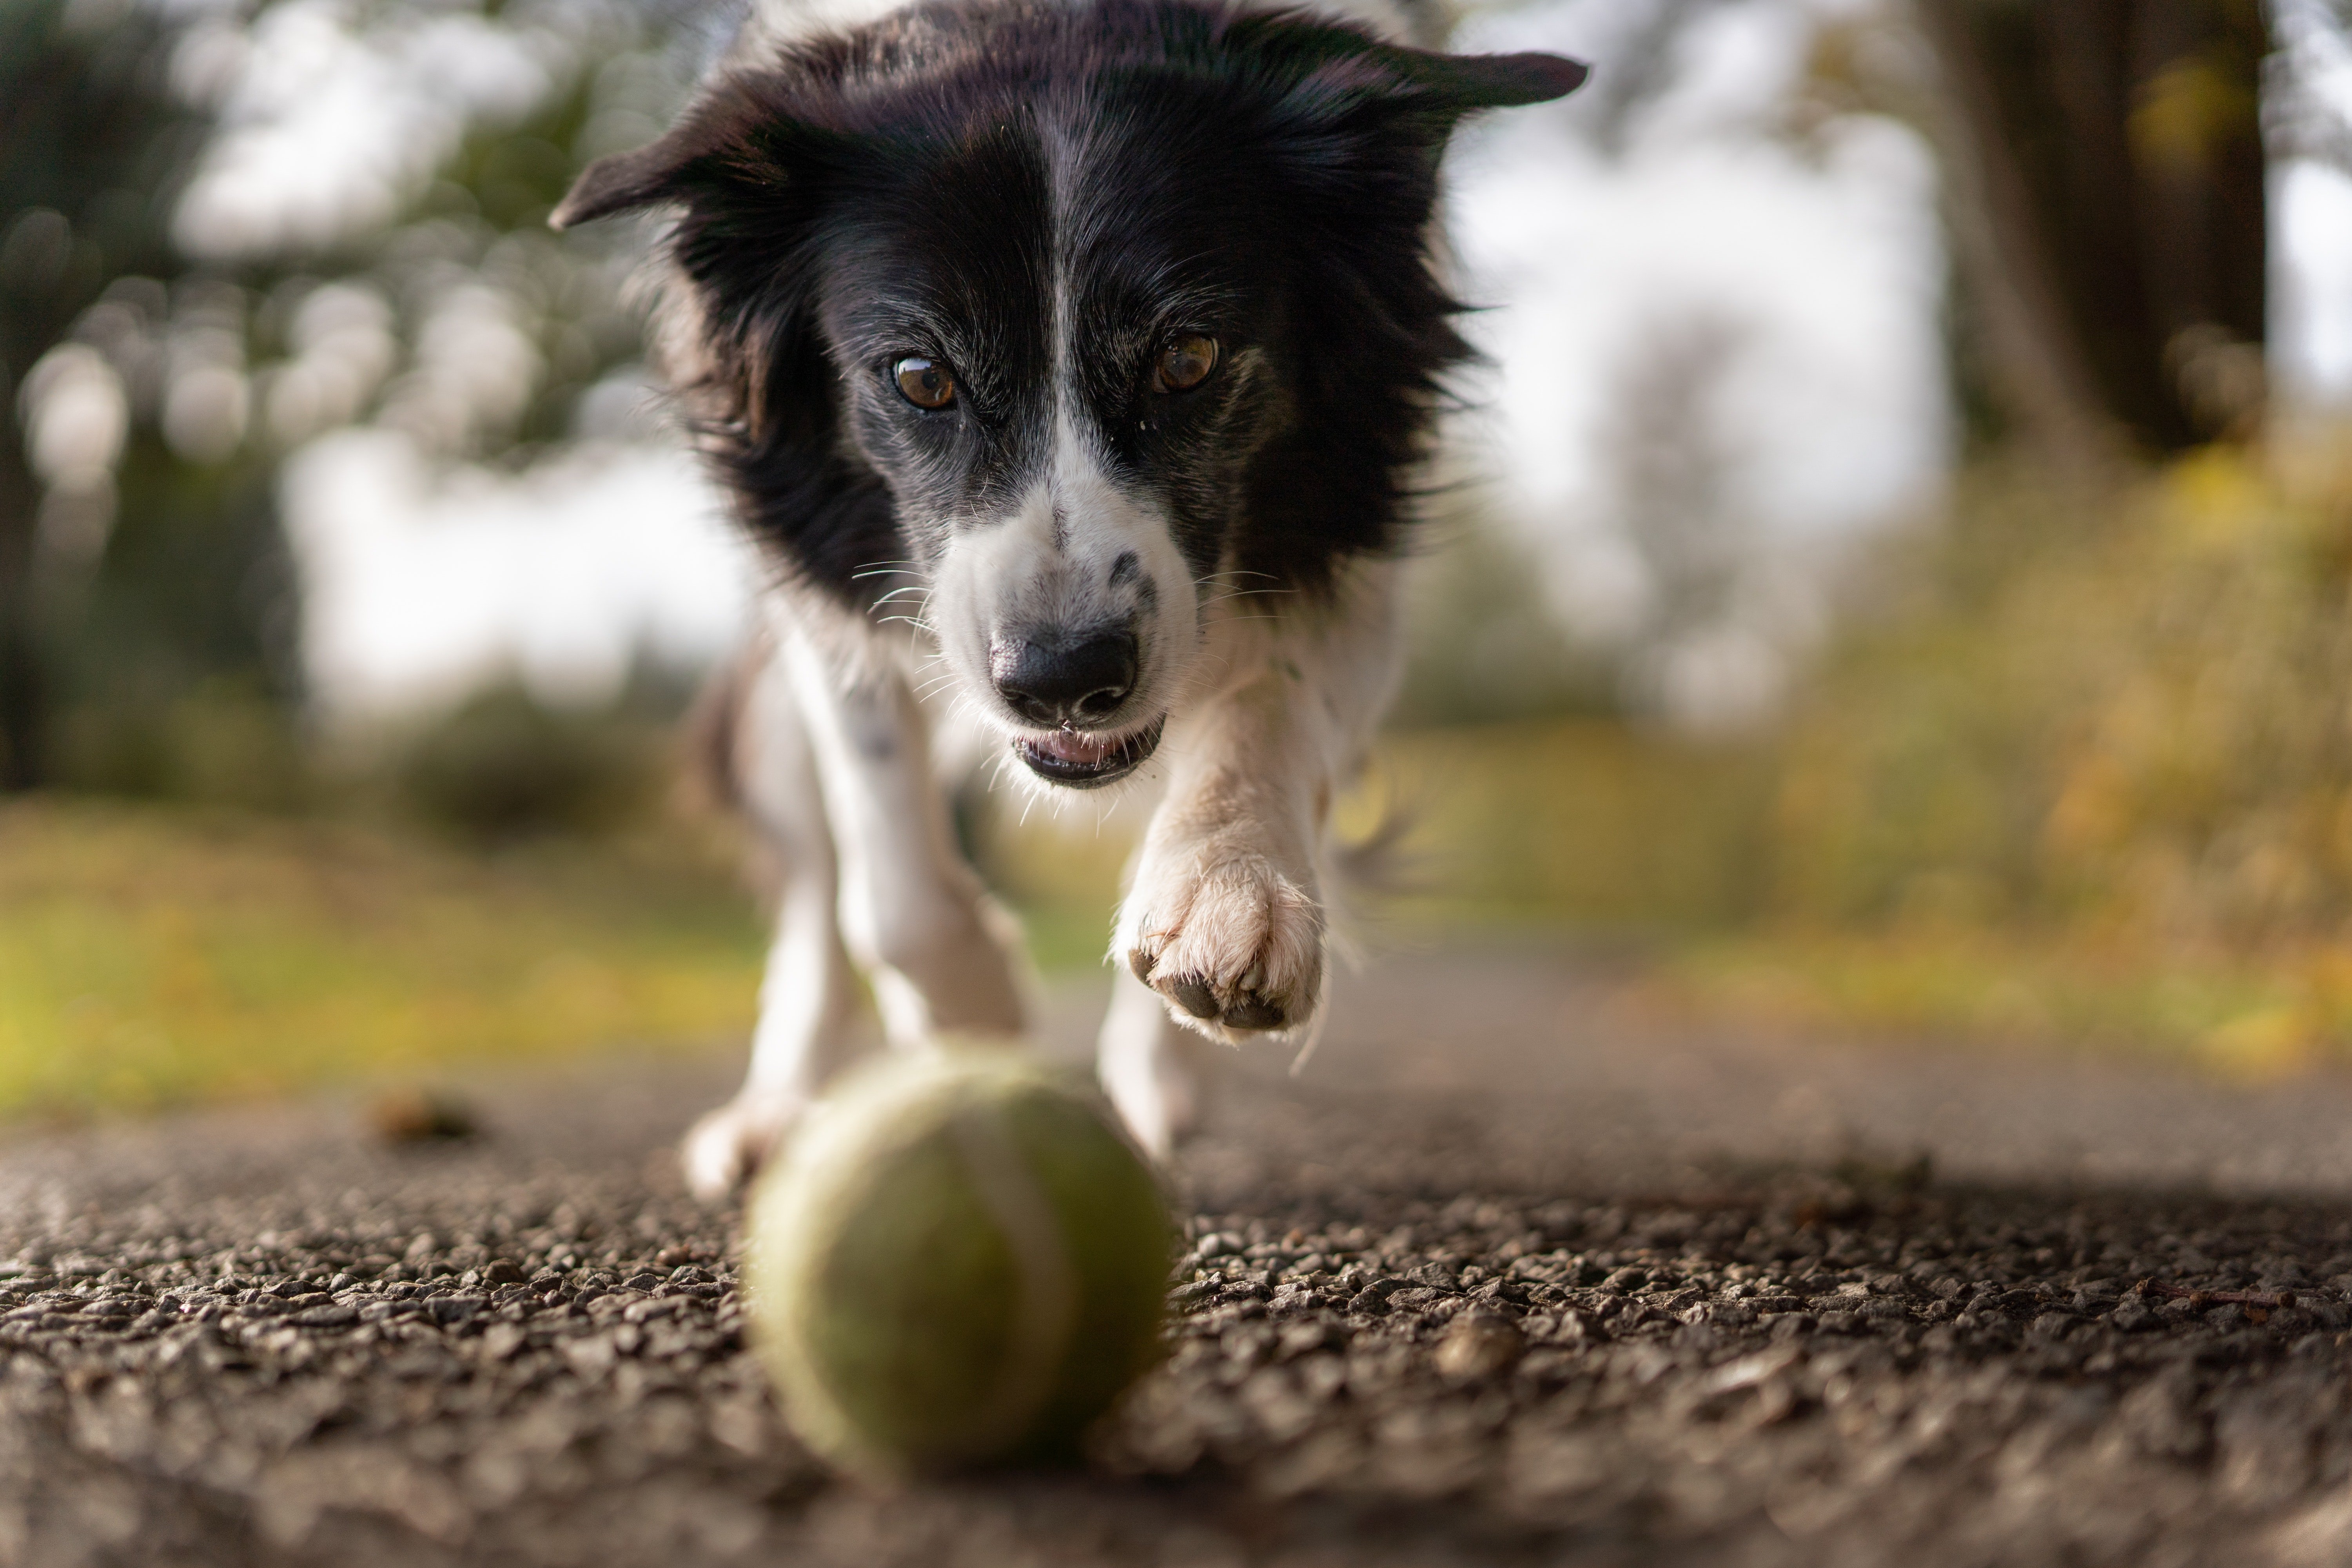 A dog chasing a ball down the road. | Source: Pexels/ Aloïs Moubax